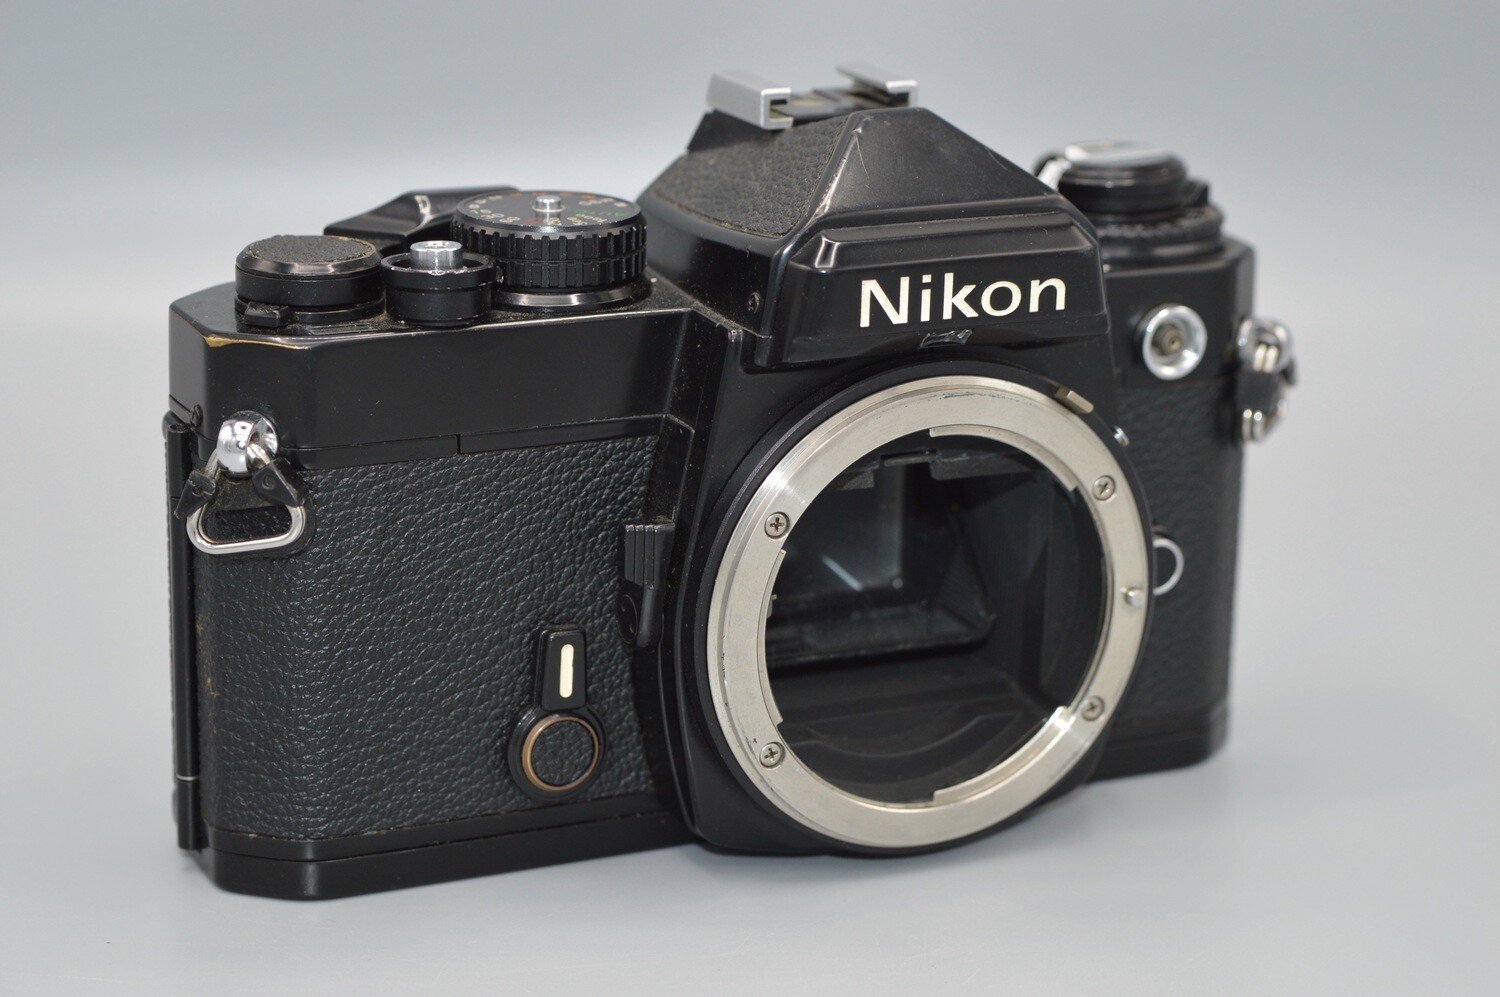 Nikon FE 35mm SLR Film Camera Black Body only